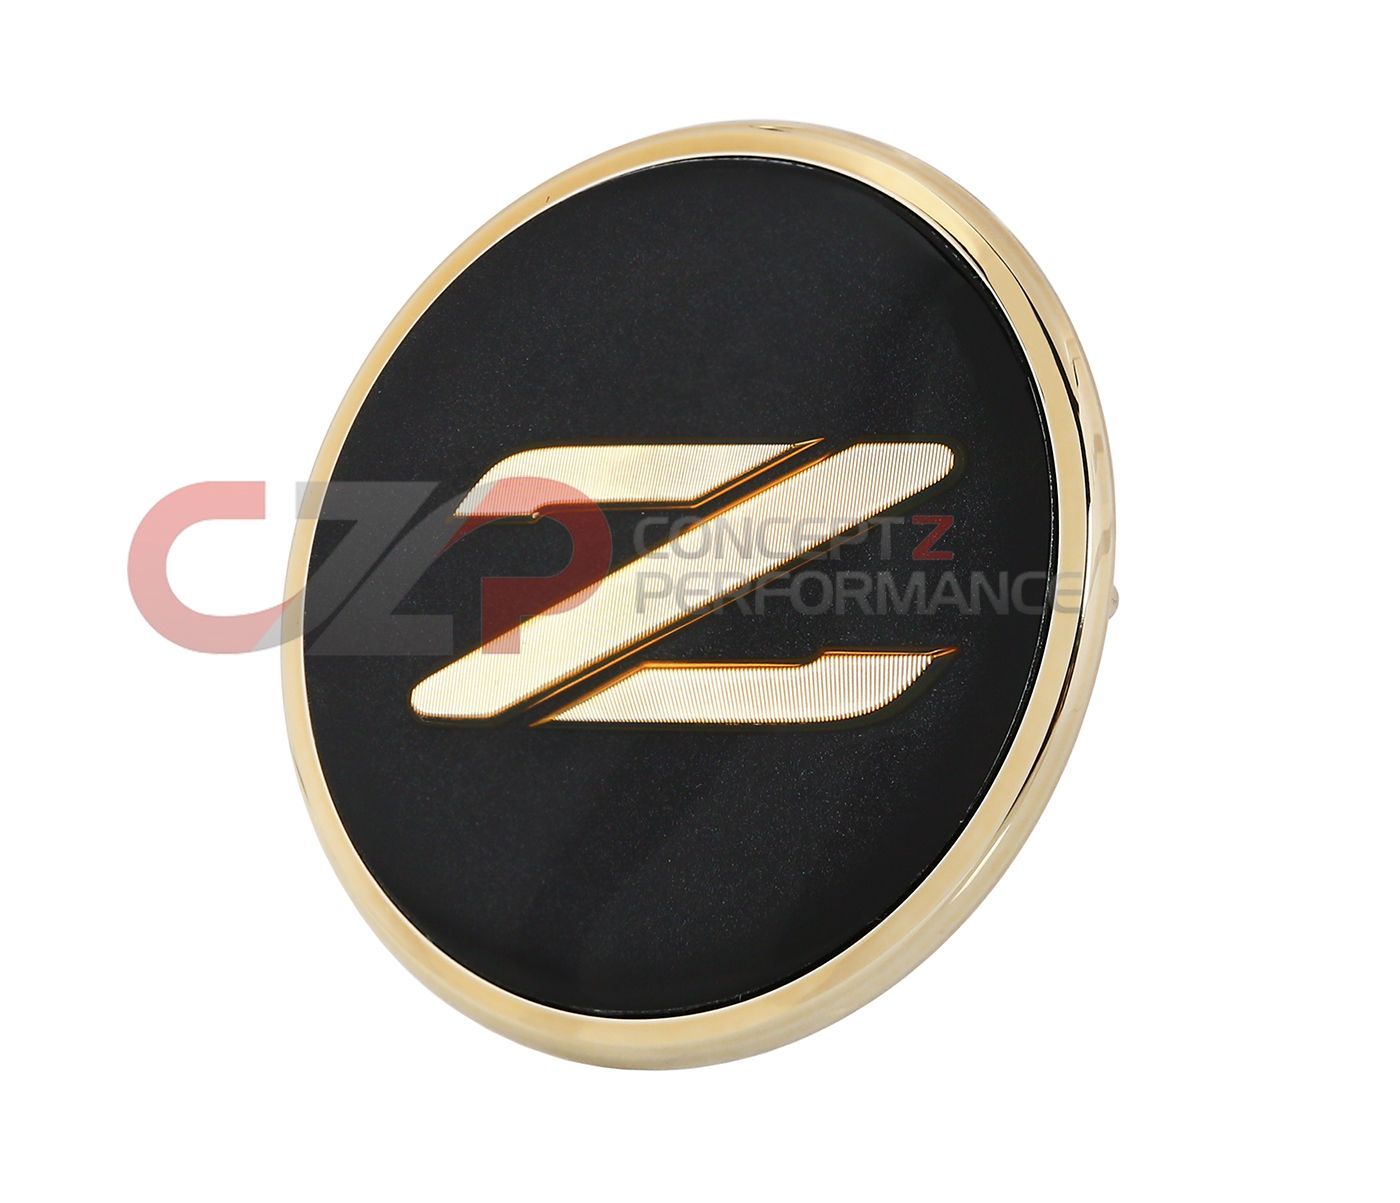 Nissan JDM Center Nose Panel Emblem, Black w/ Gold Trim - Nissan 300ZX Z32